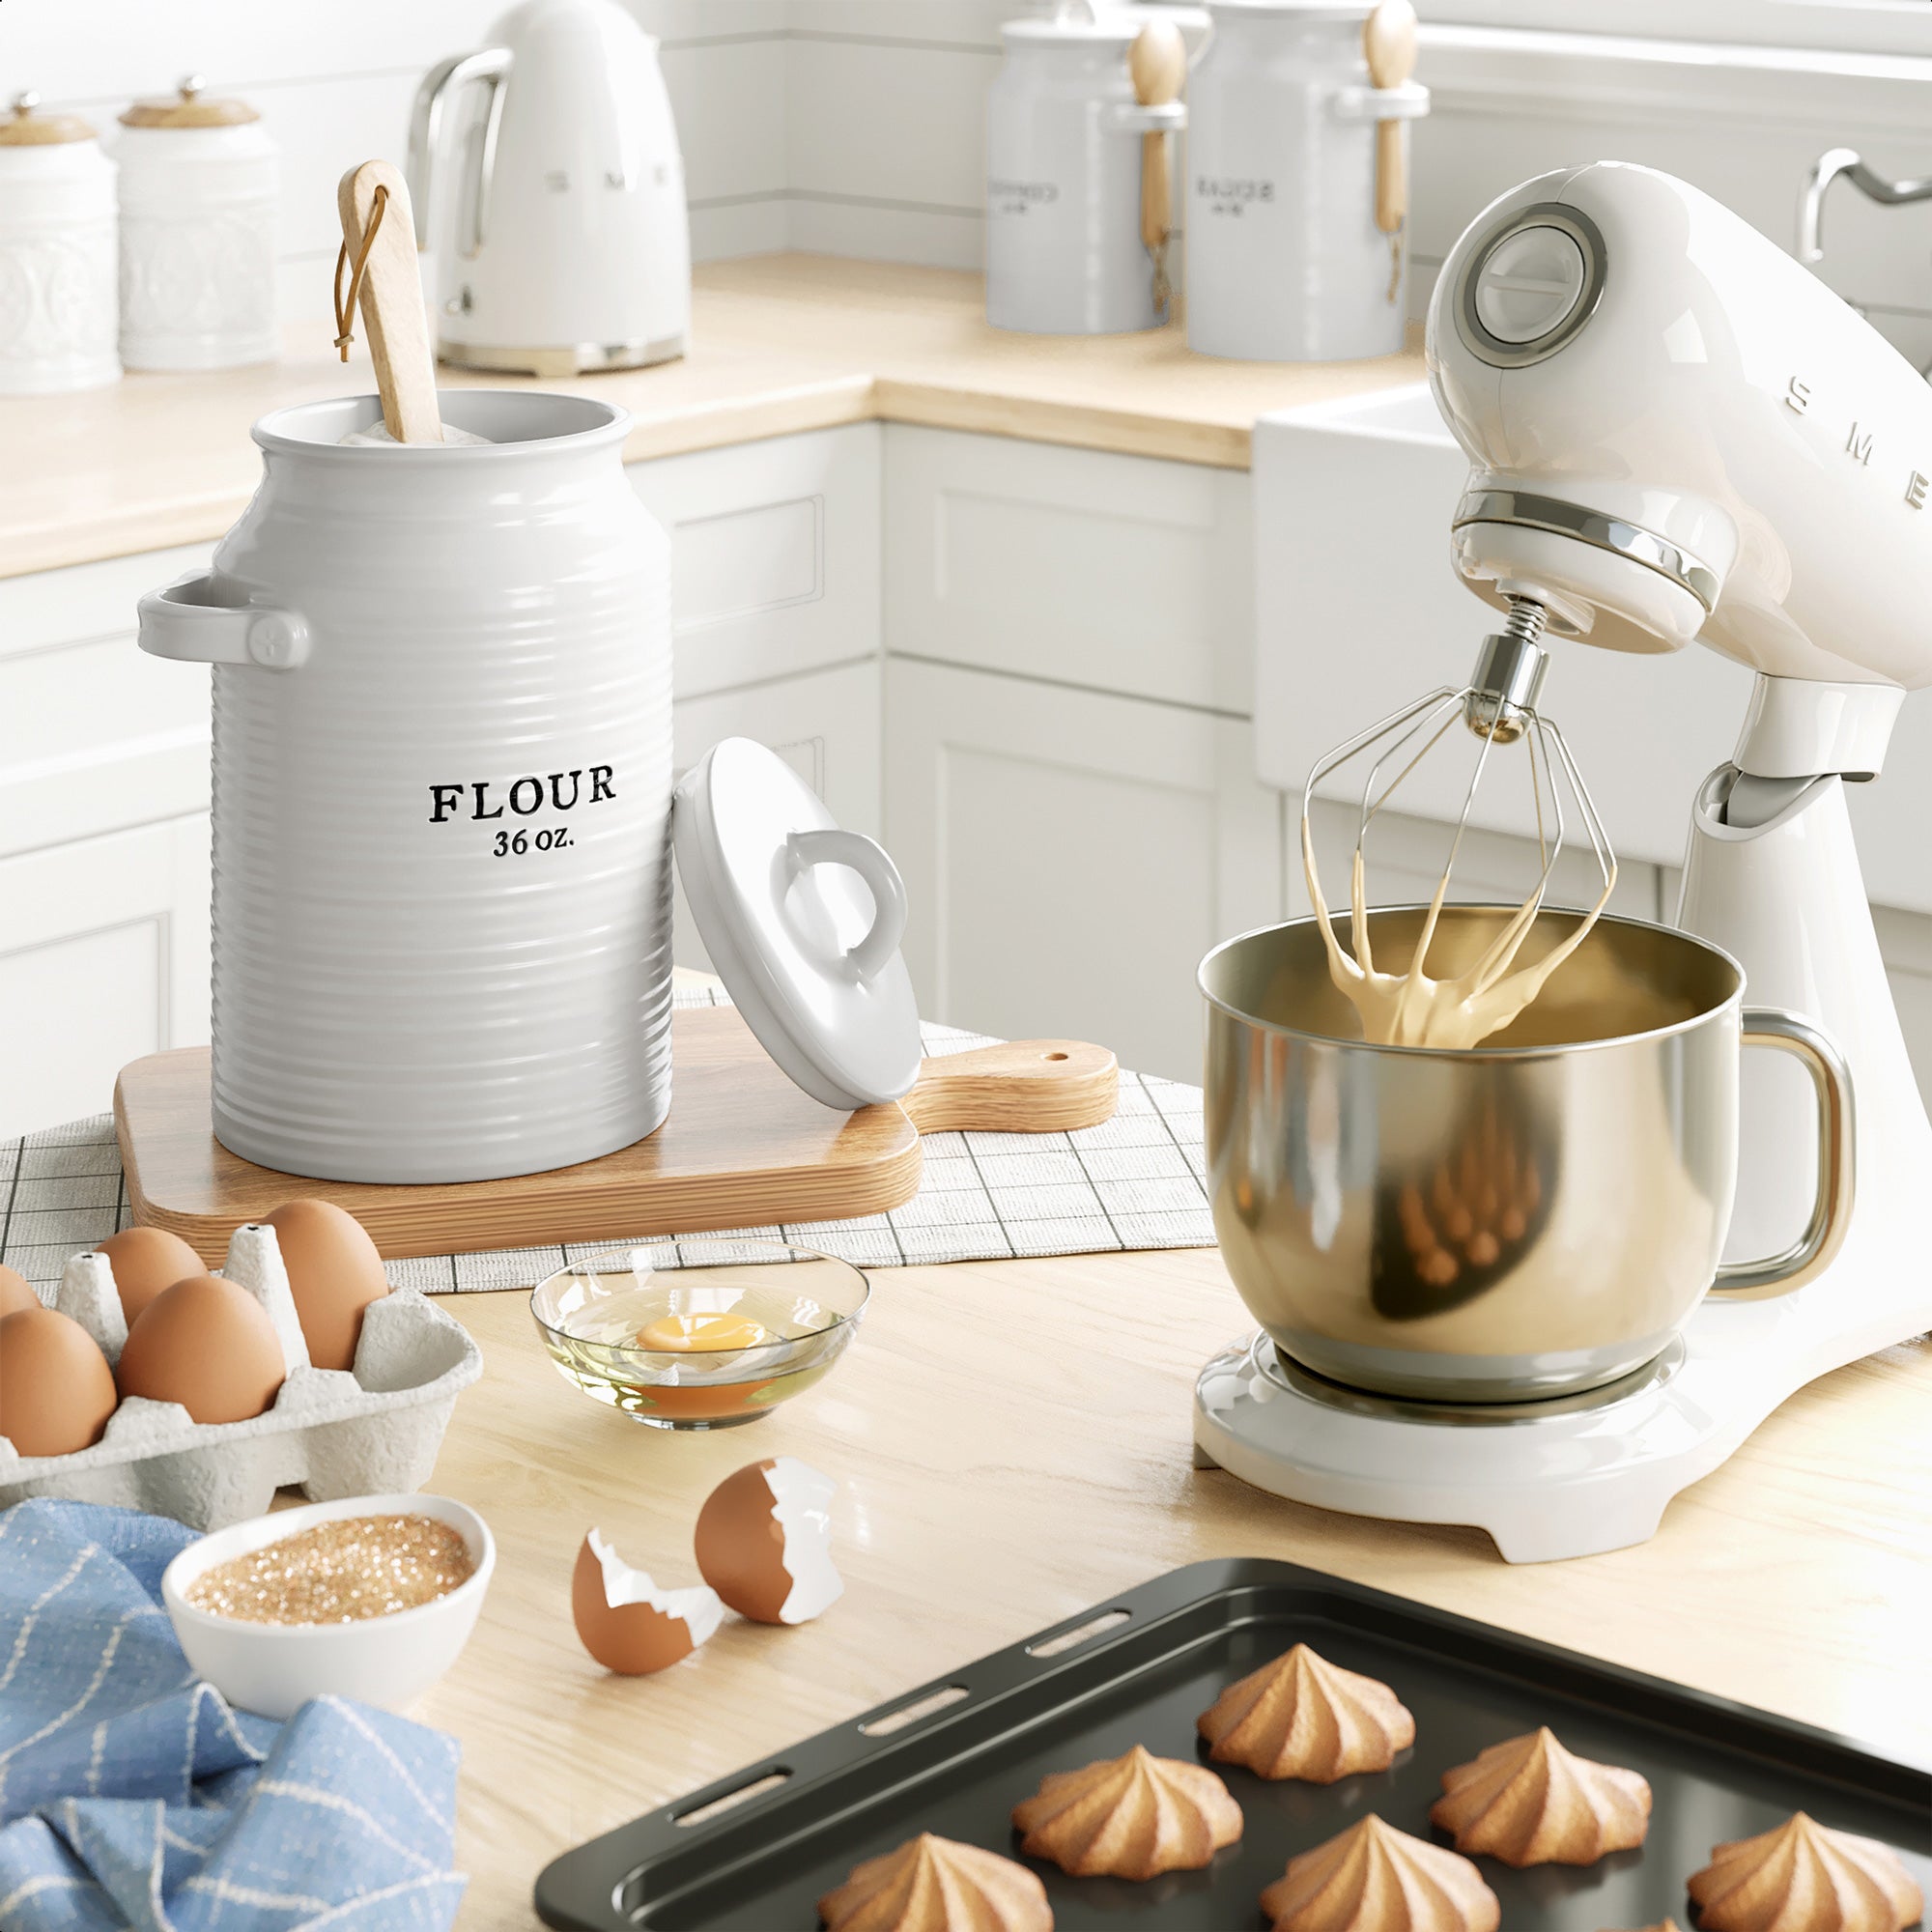 KitchenCraft Living Nostalgia Flour Canister